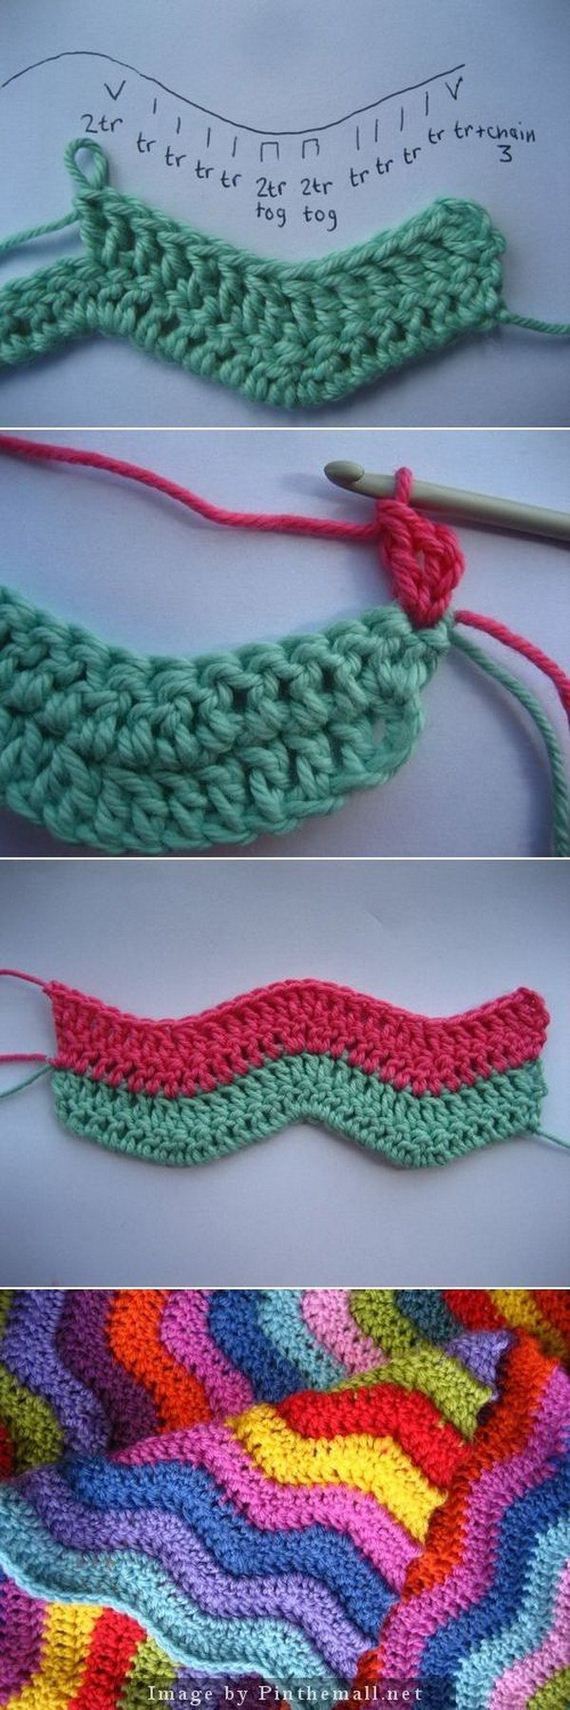 10-crochet-blankets